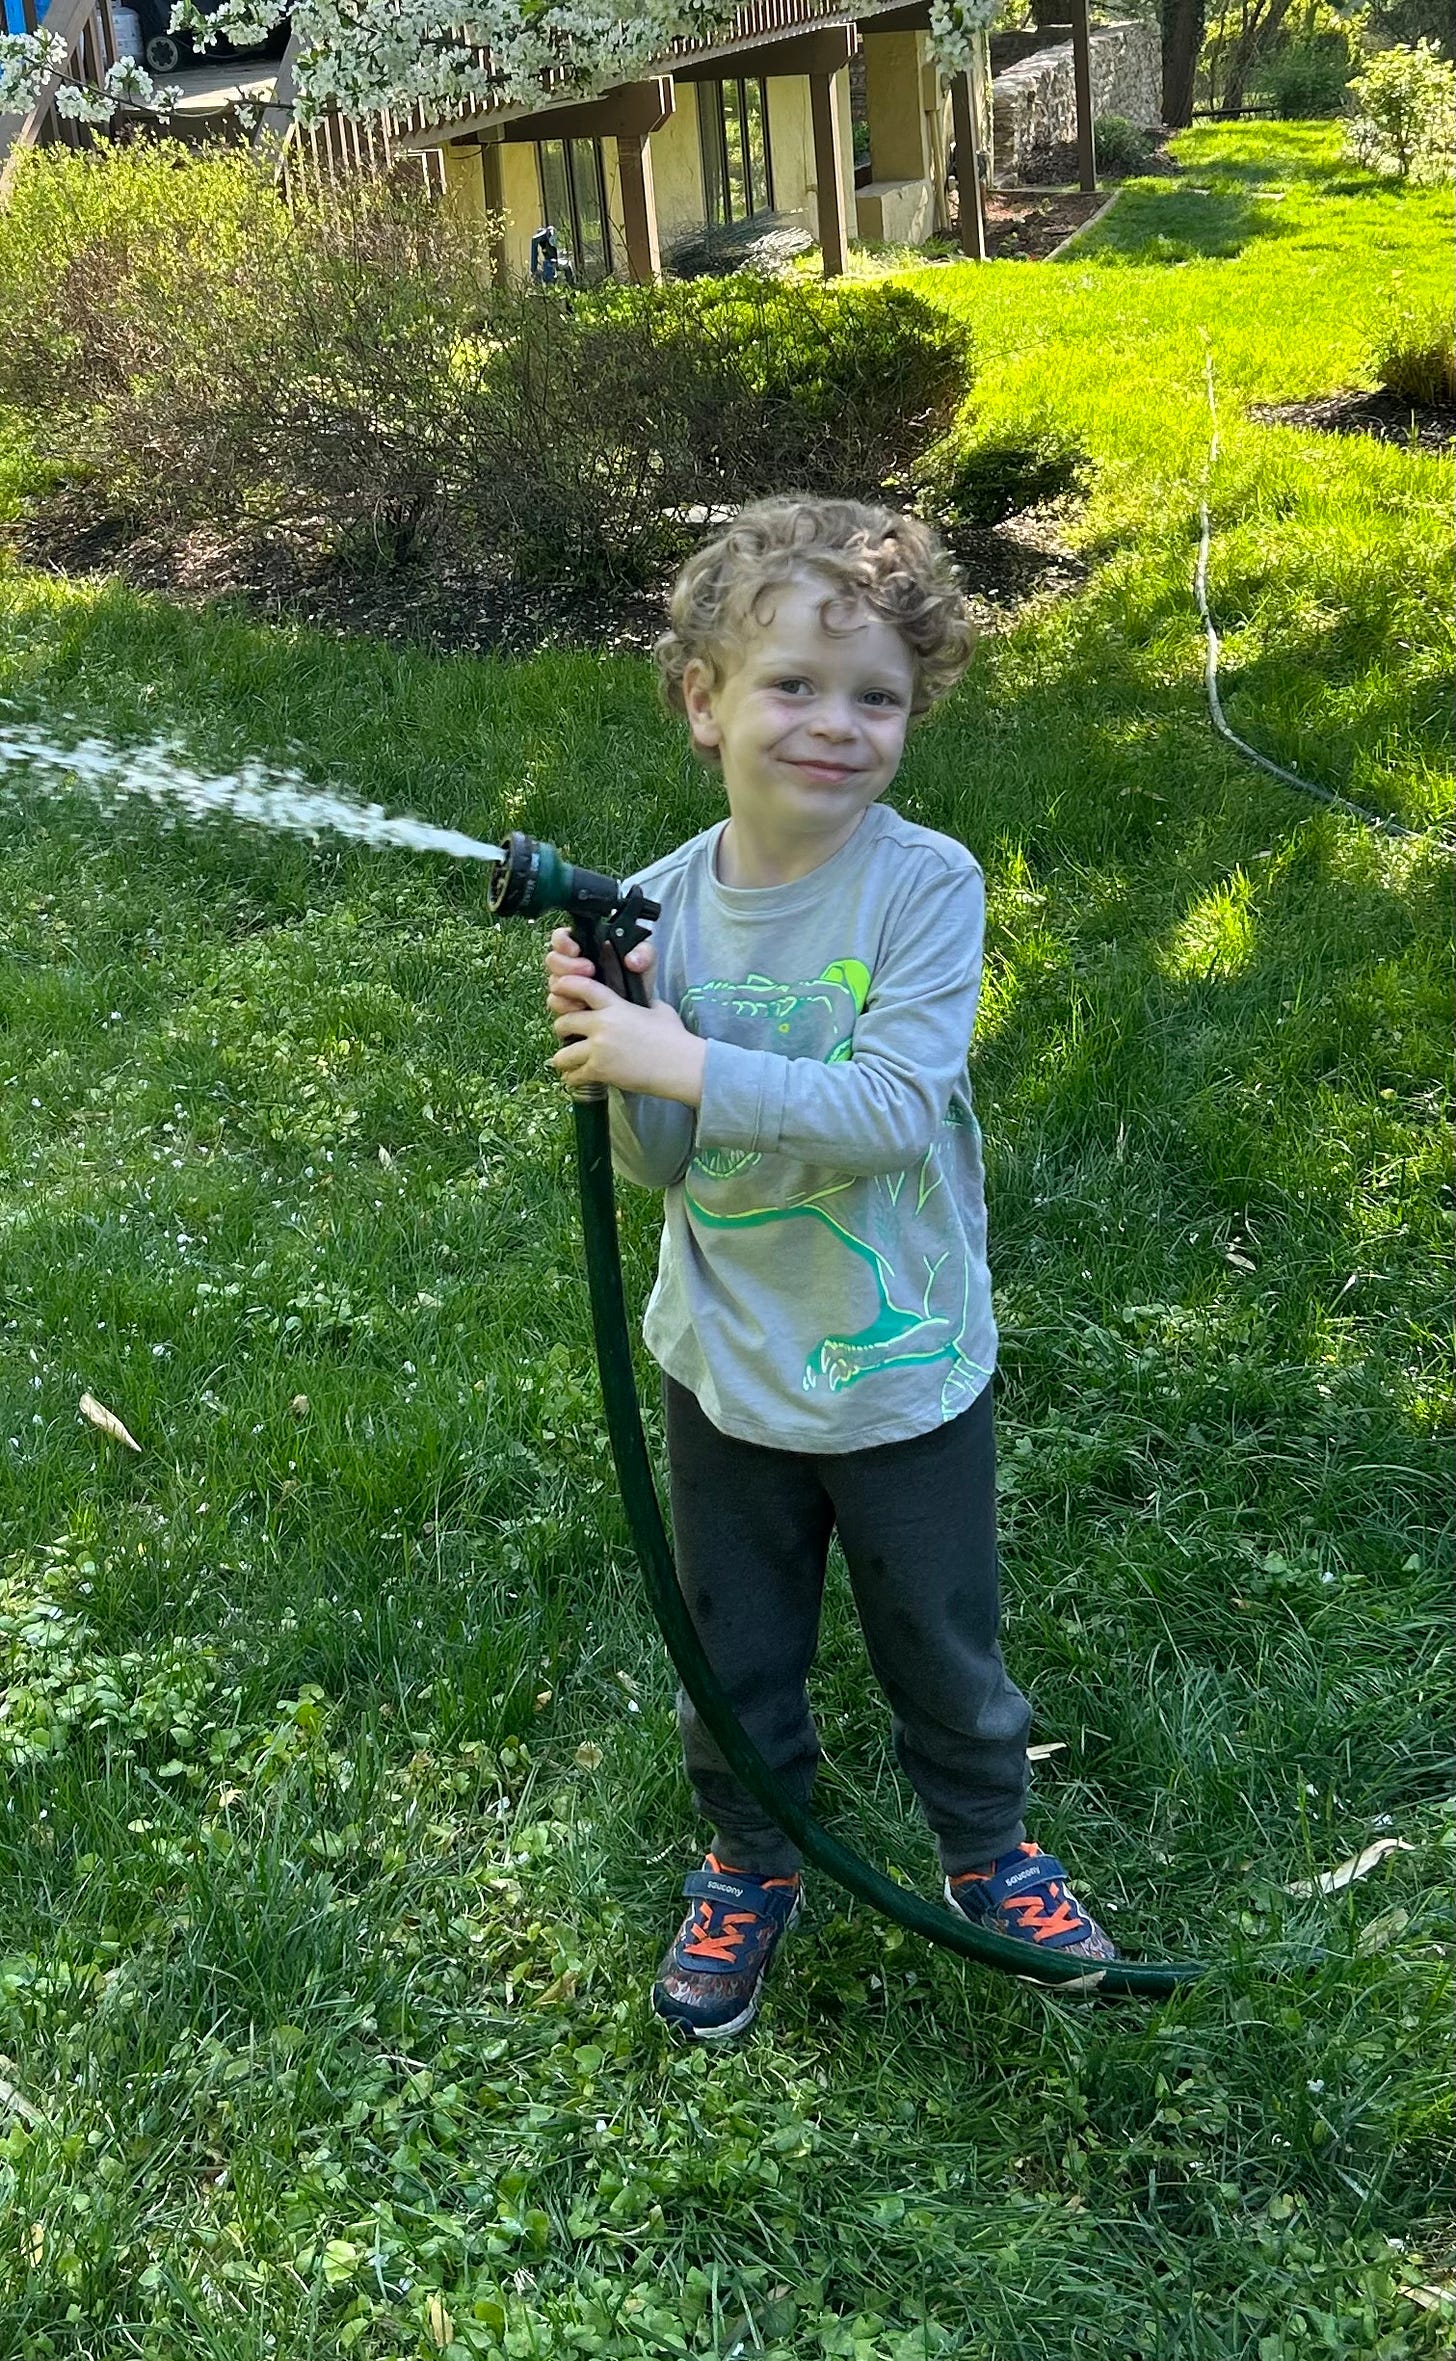 Jagger spraying a garden hose